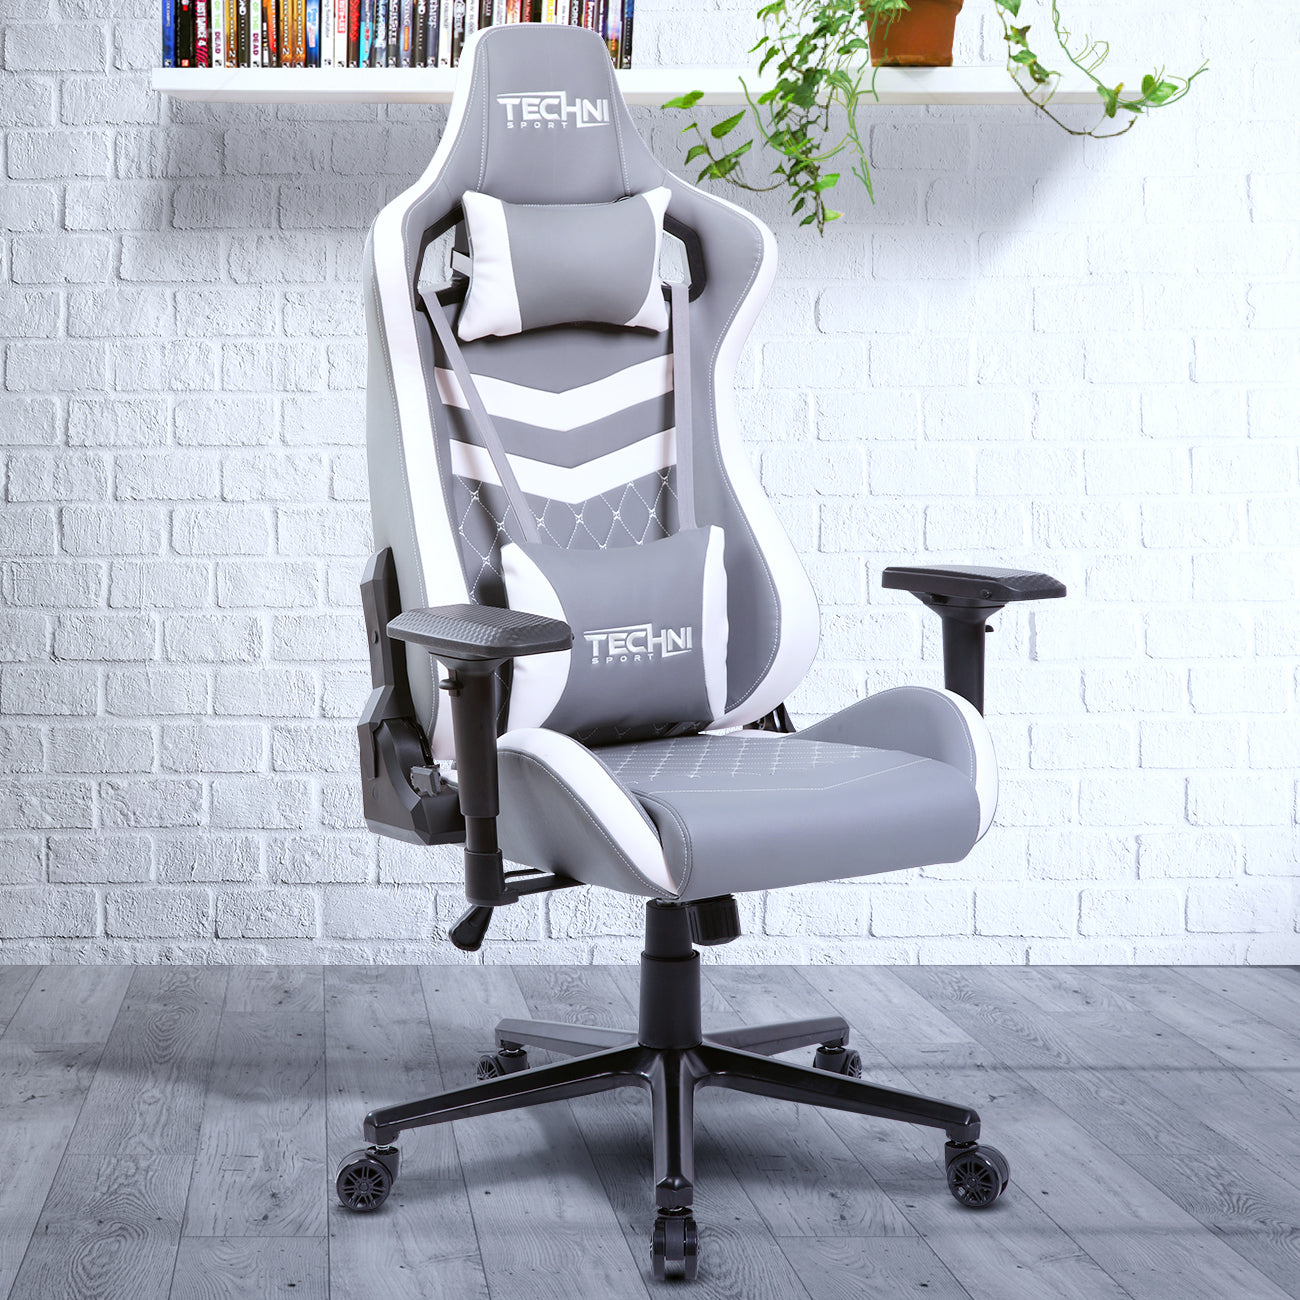 Techni Sport TS-83 Ergonomic High Back Racer Style PC Gaming Chair, Grey/White